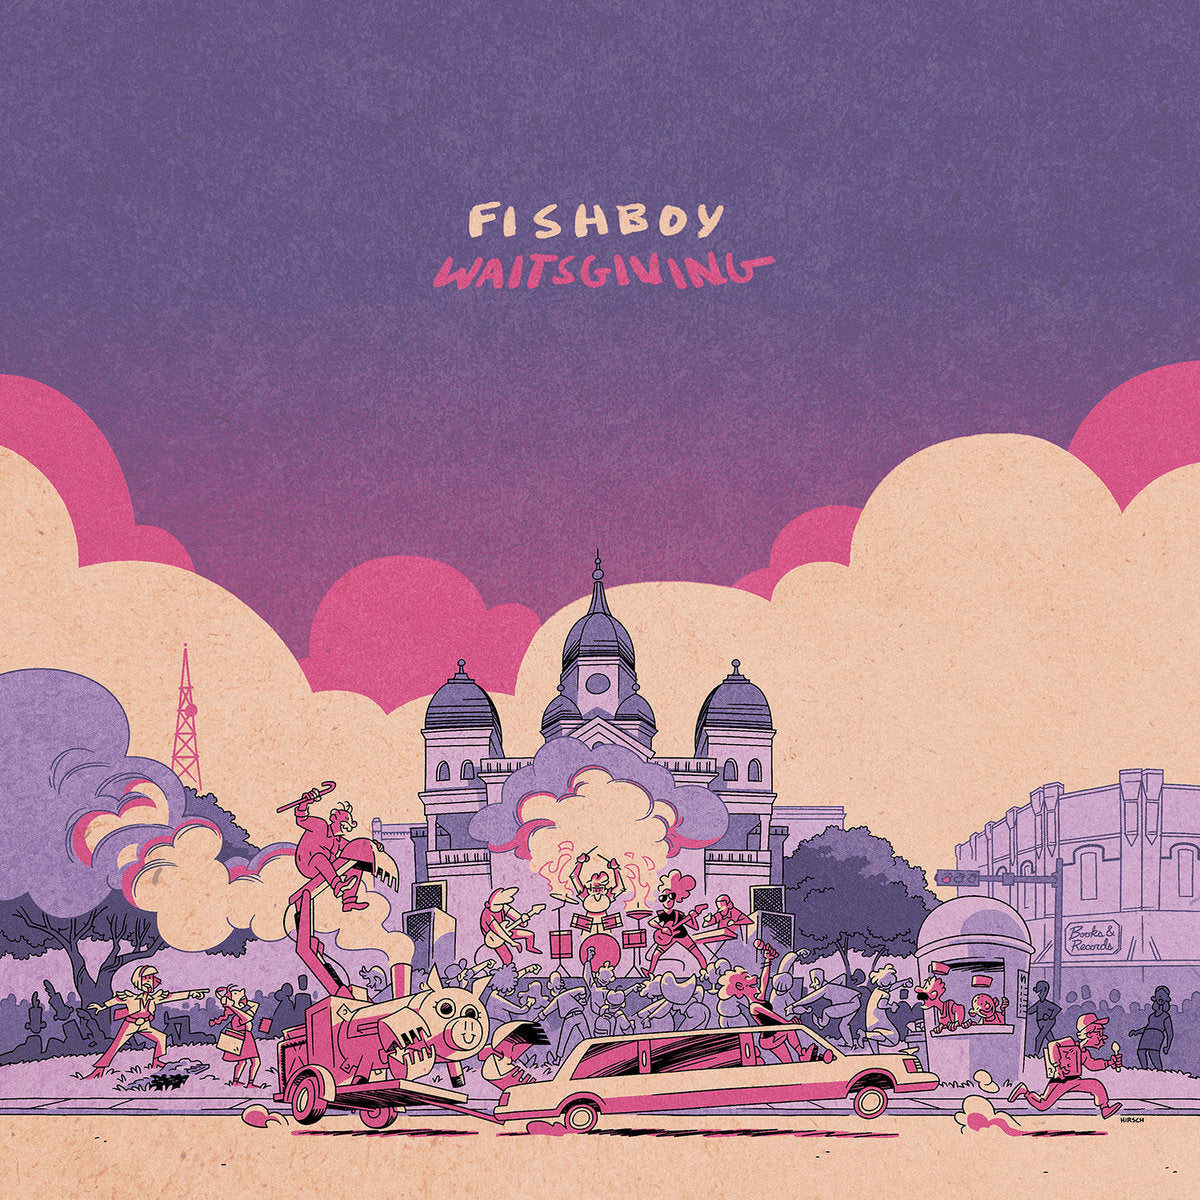 Fishboy "Waitsgiving" LP